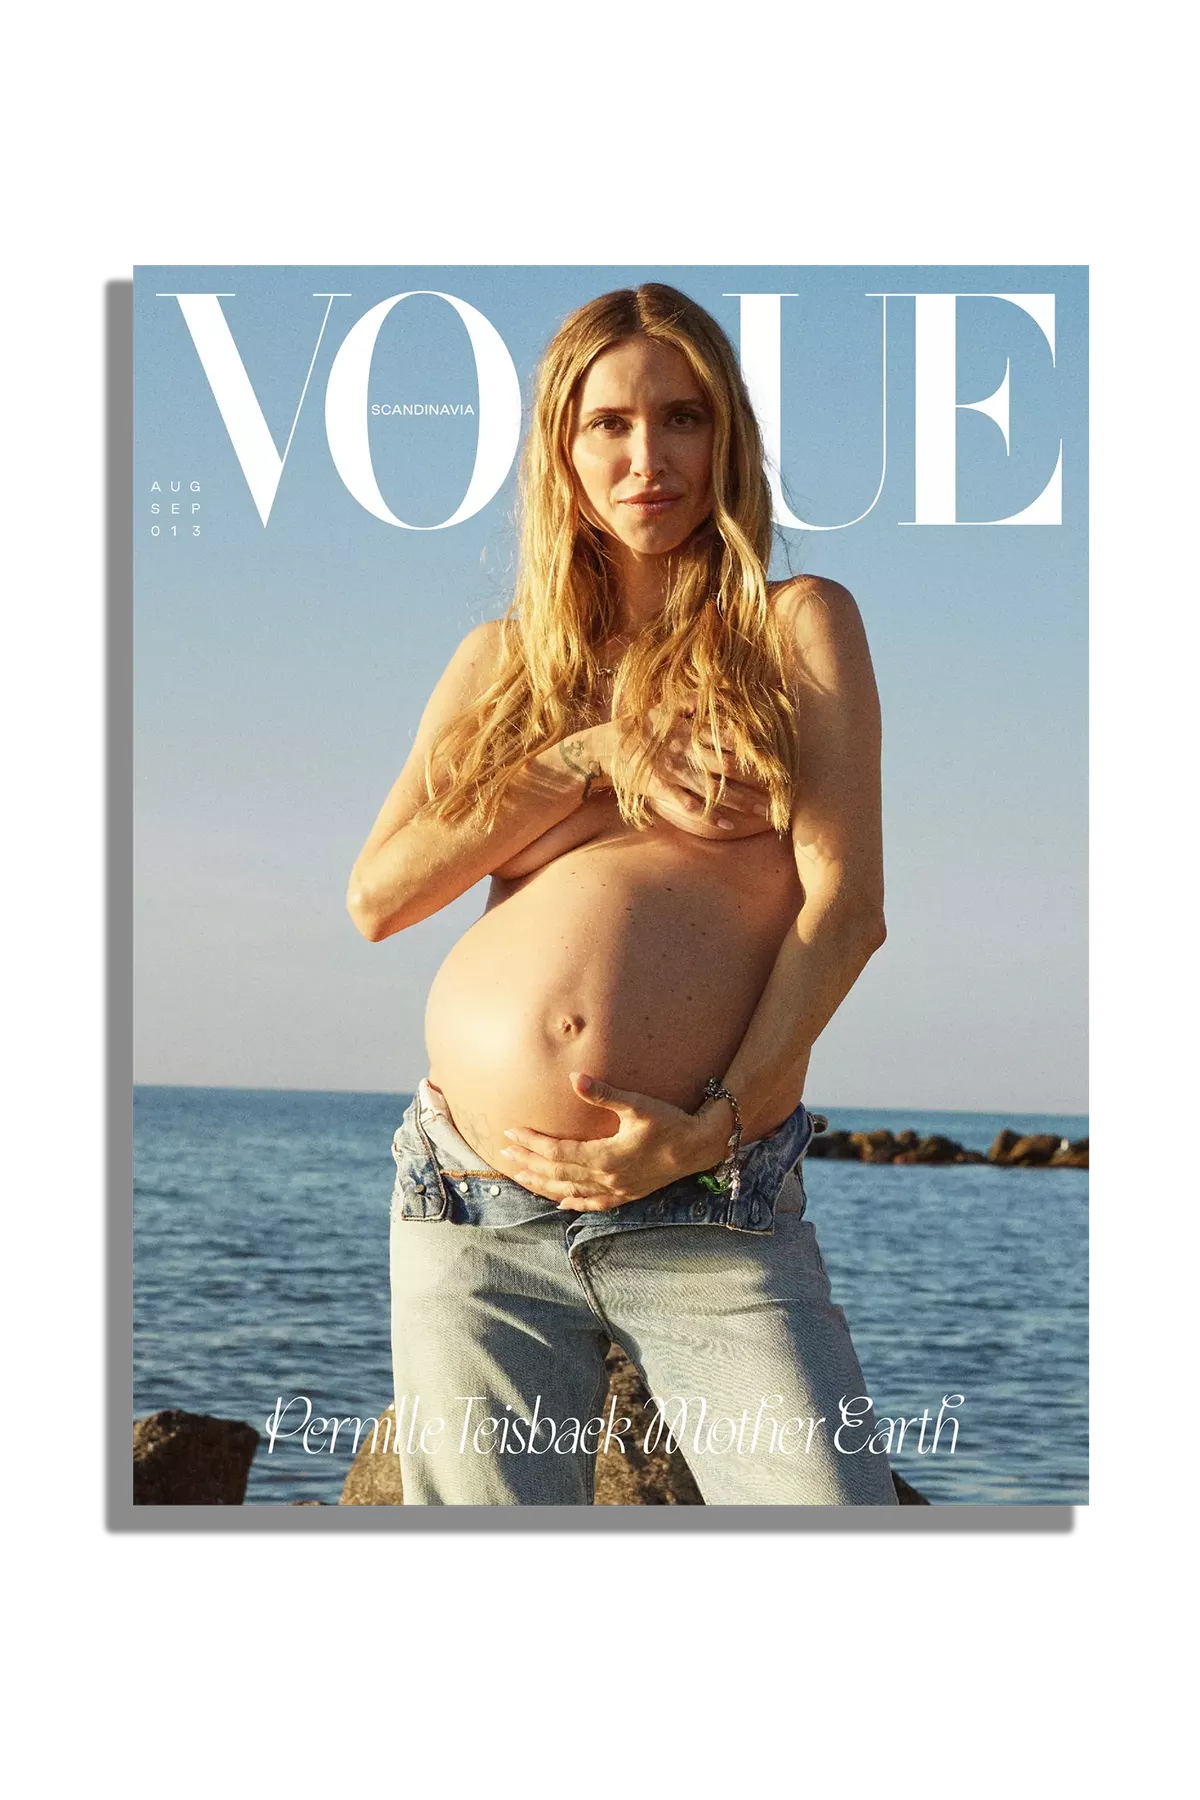 Vogue Scandinavia Magazine — The August/September Issue 